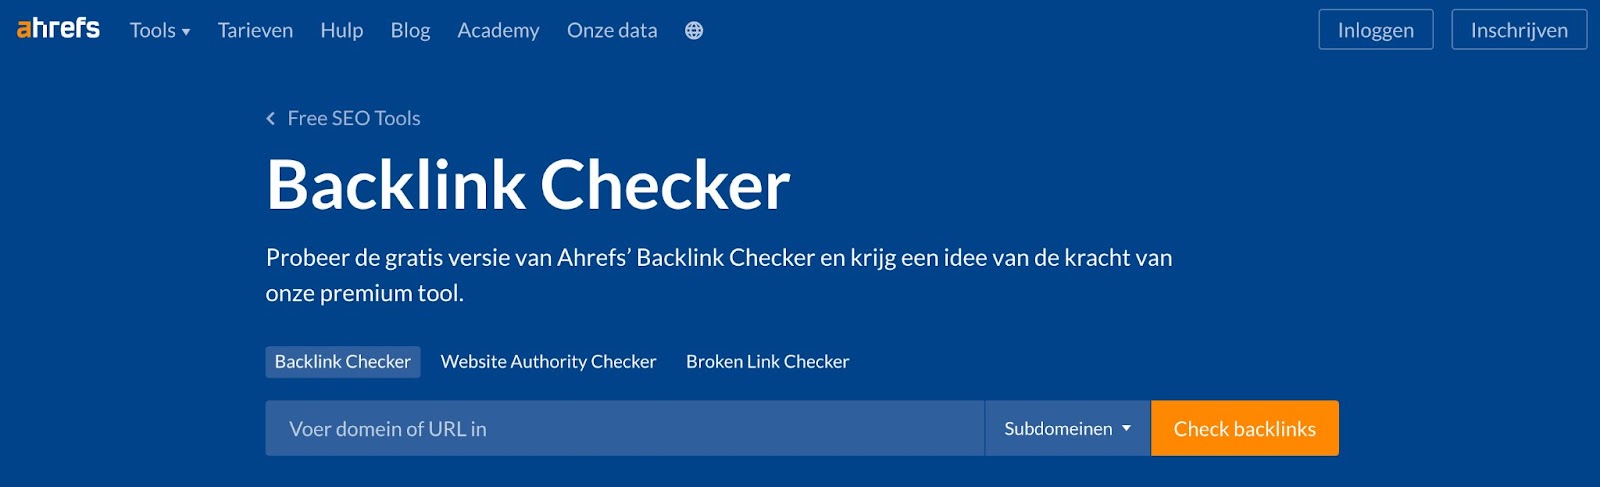 Beste gratis SEO tools 2022: Ahrefs backlink checker.